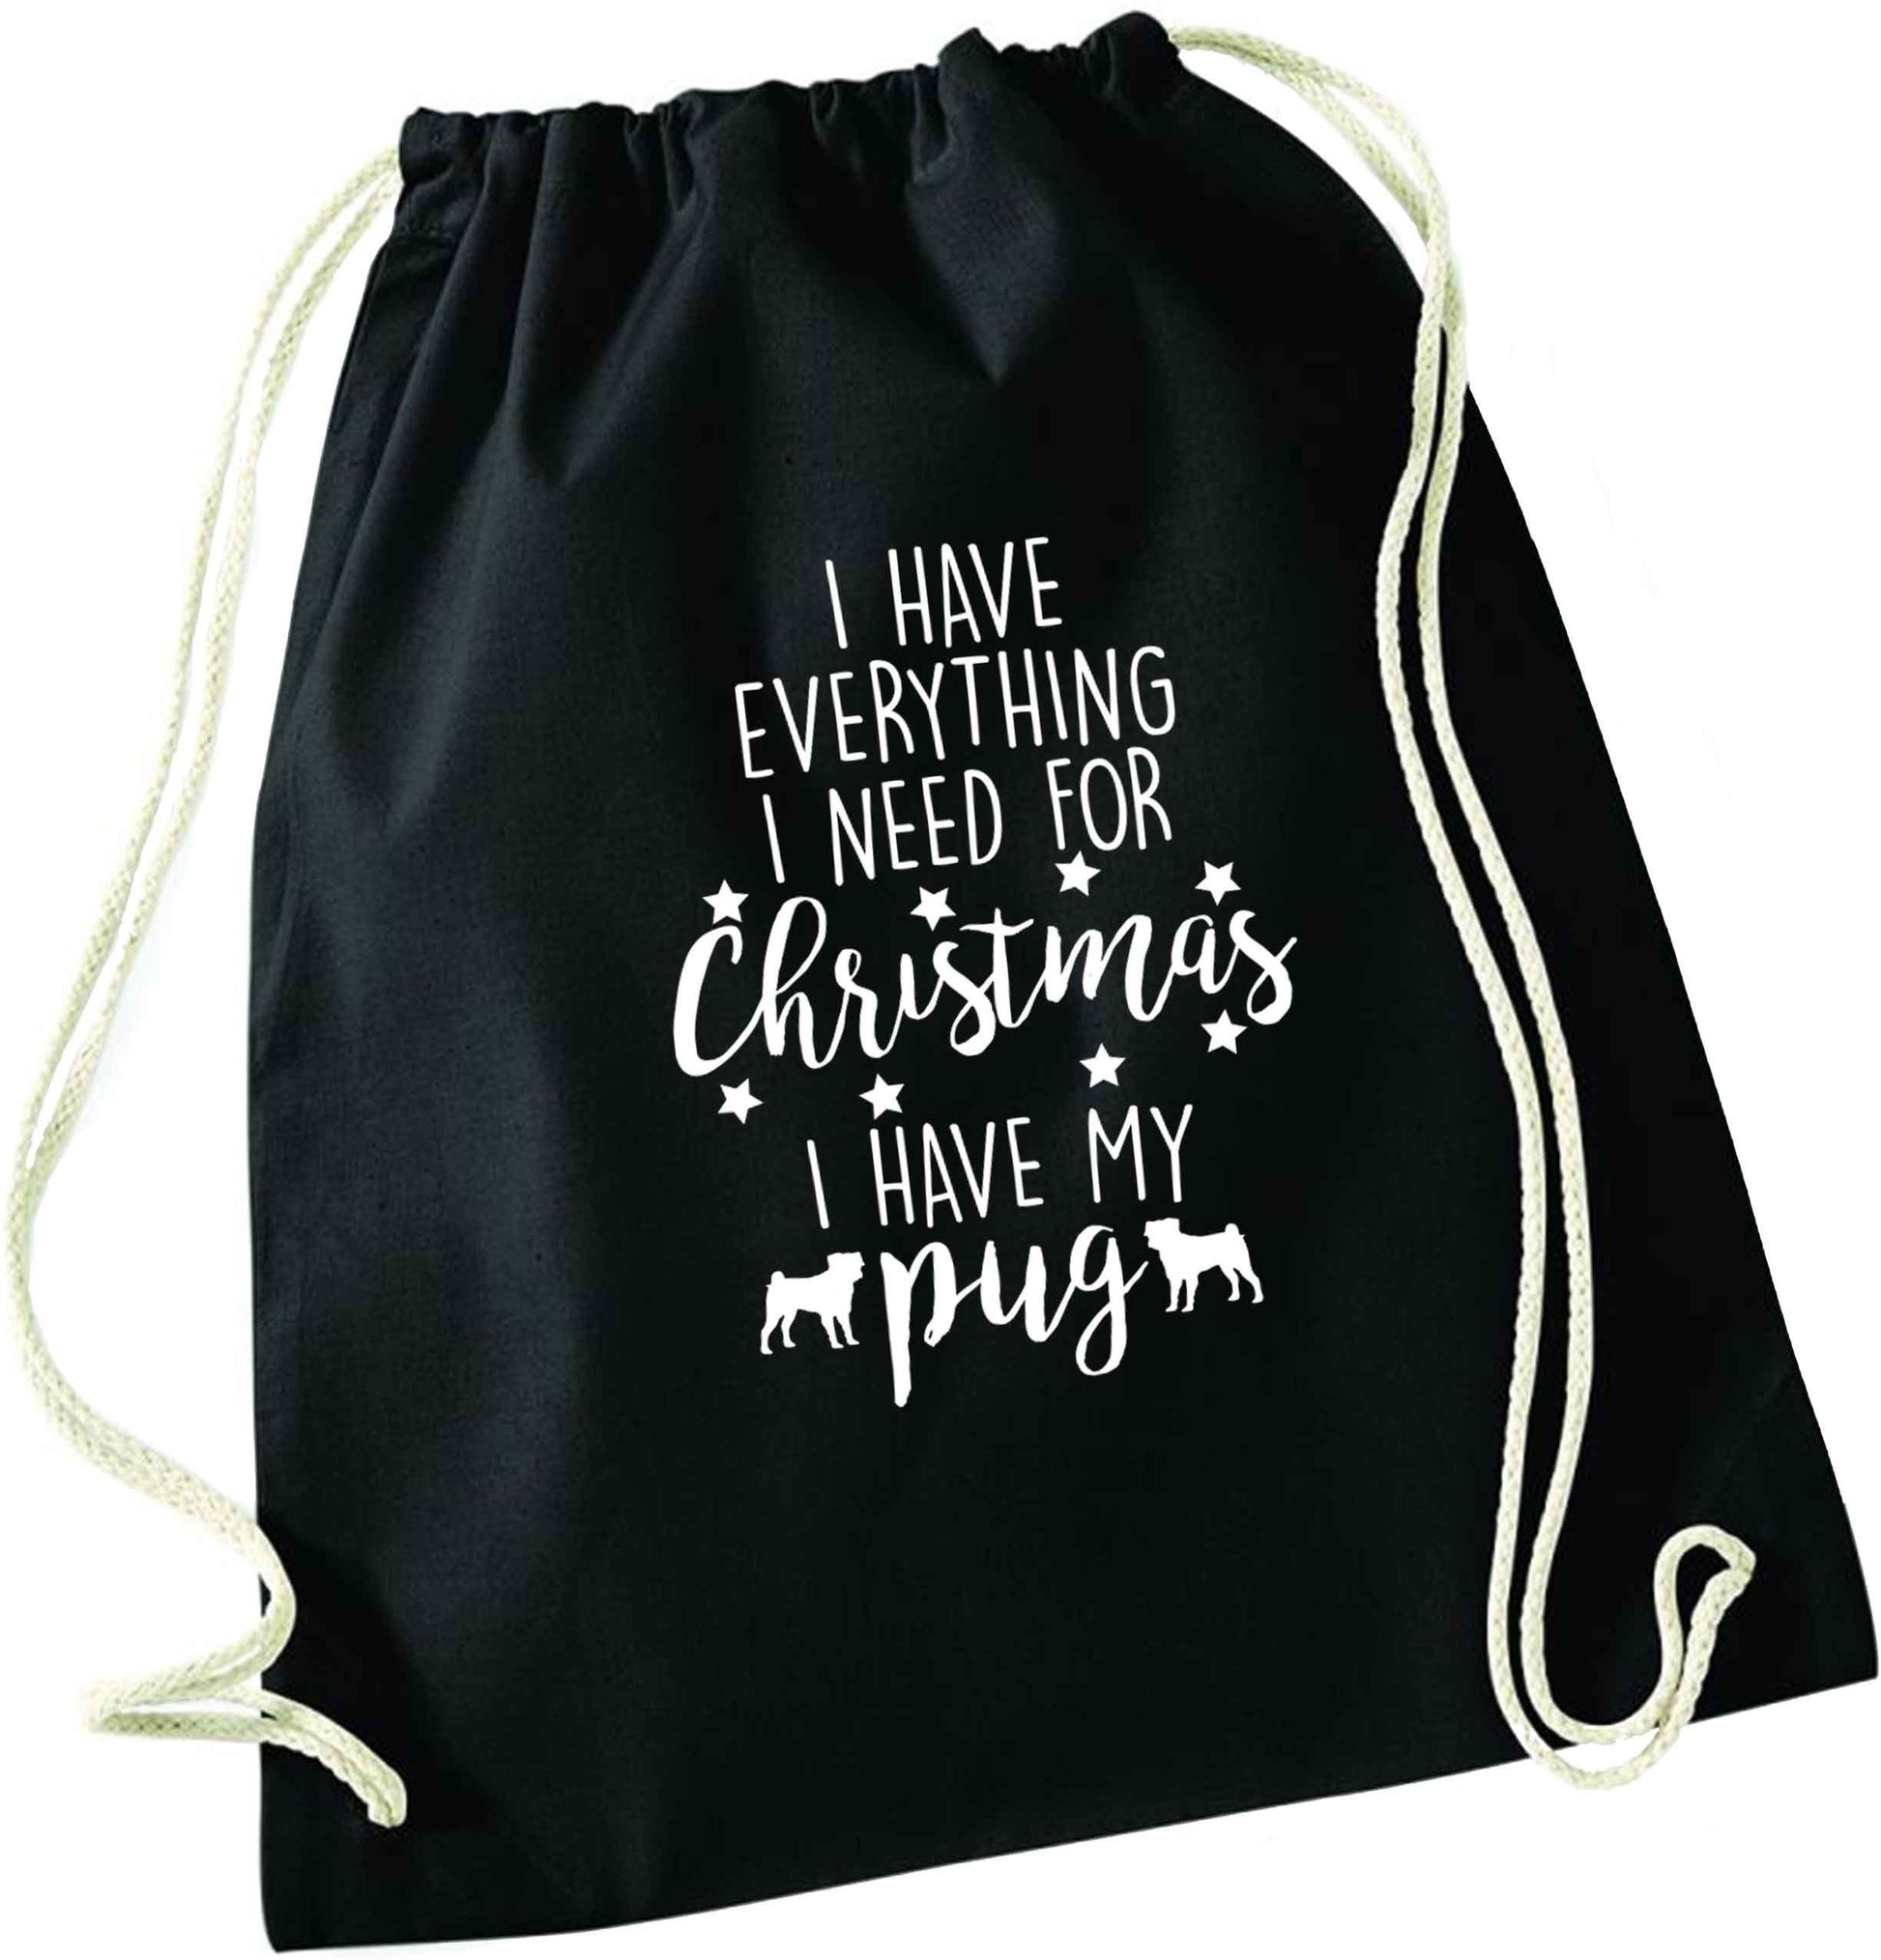 I have everything I need for Christmas I have my pug black drawstring bag